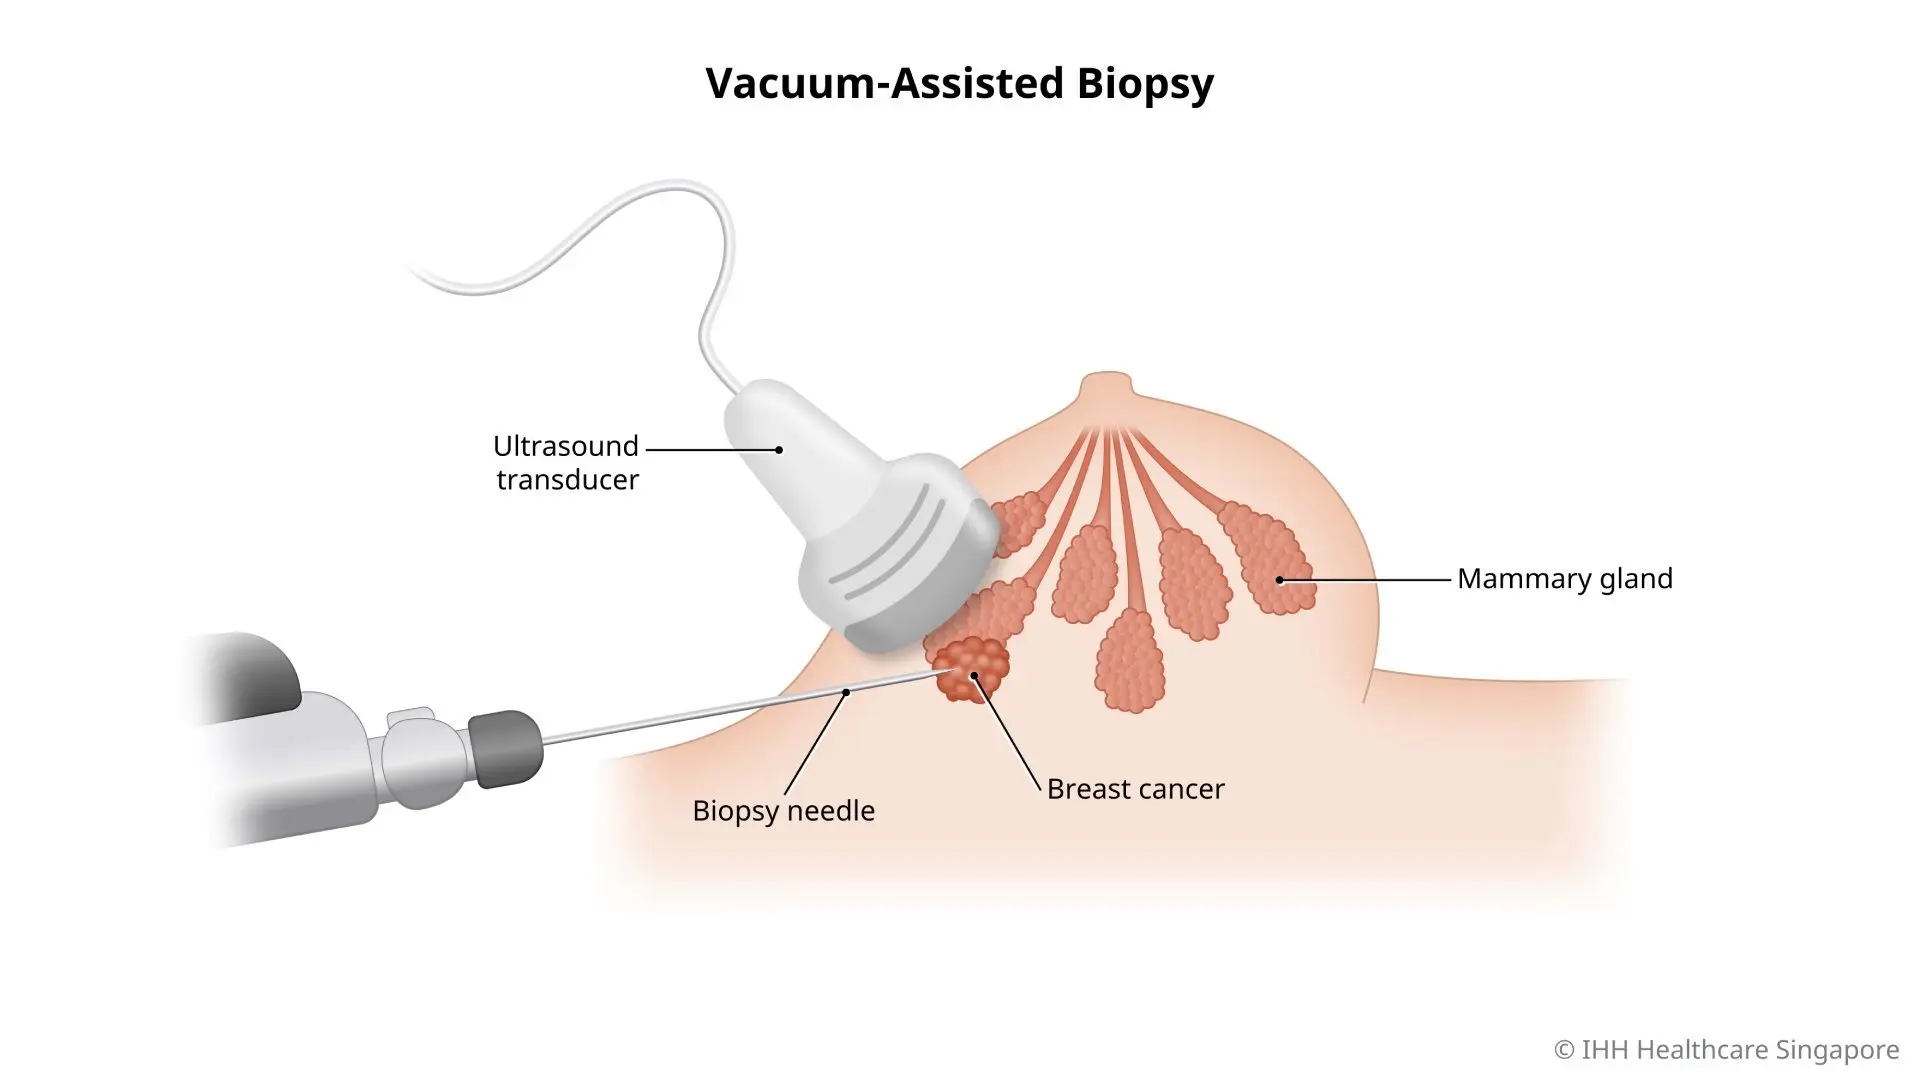 Vacuum-Assisted Biopsy (VAB)